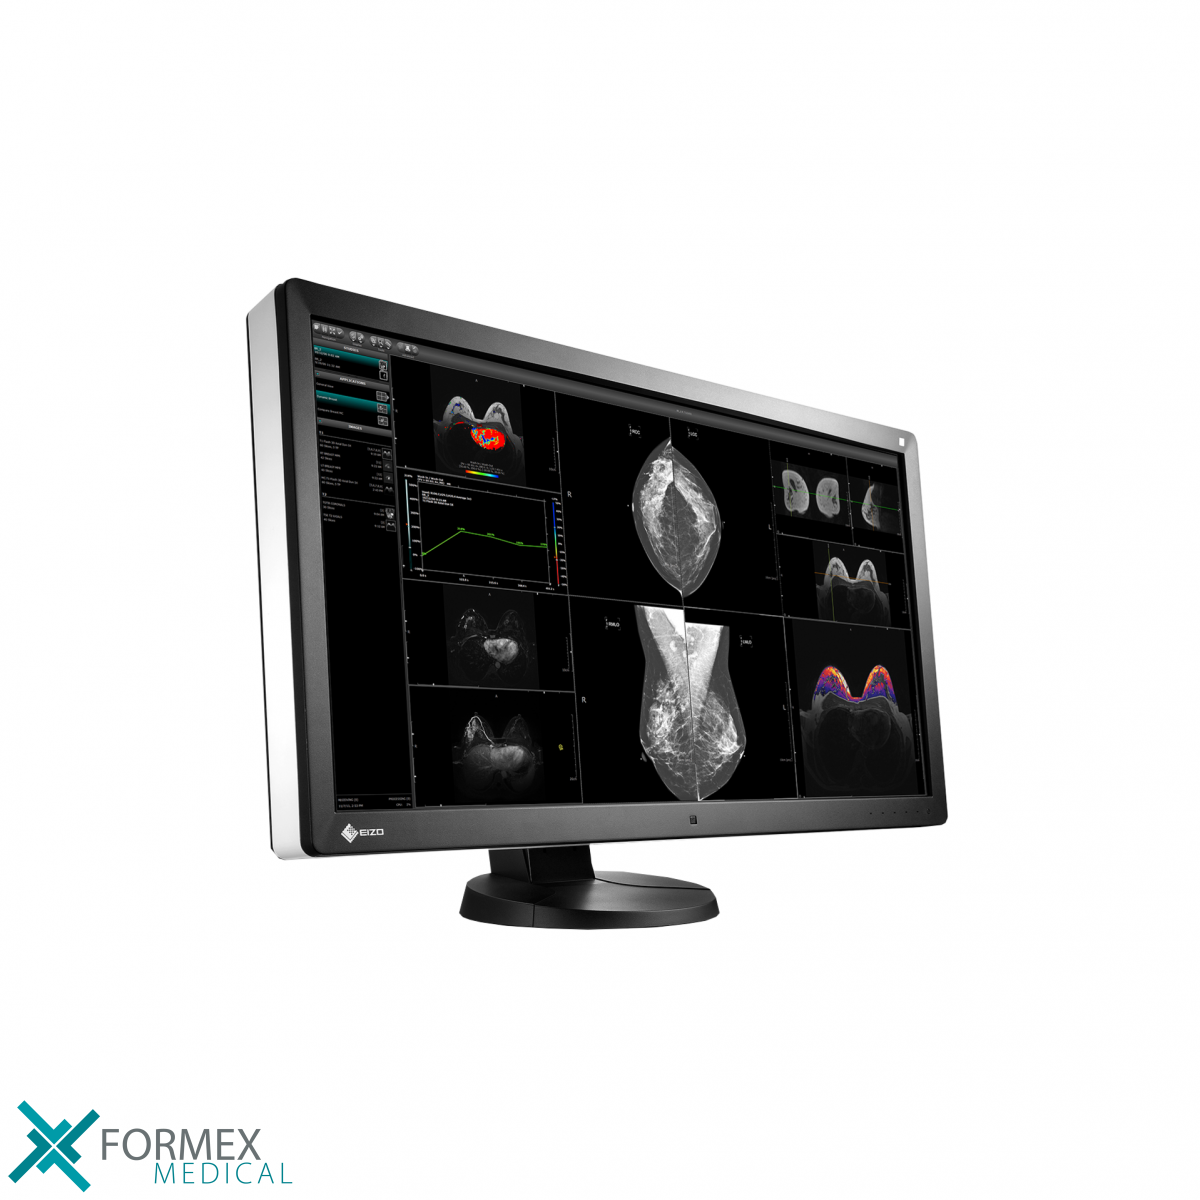 Eizo RadiForce RX850, medical displays, medische schermen, eizo medical monitor, medische monitoren, eizo medical, medische beeldschermen, diagnostische monitoren, diagnostiek monitoren, eizo monitor